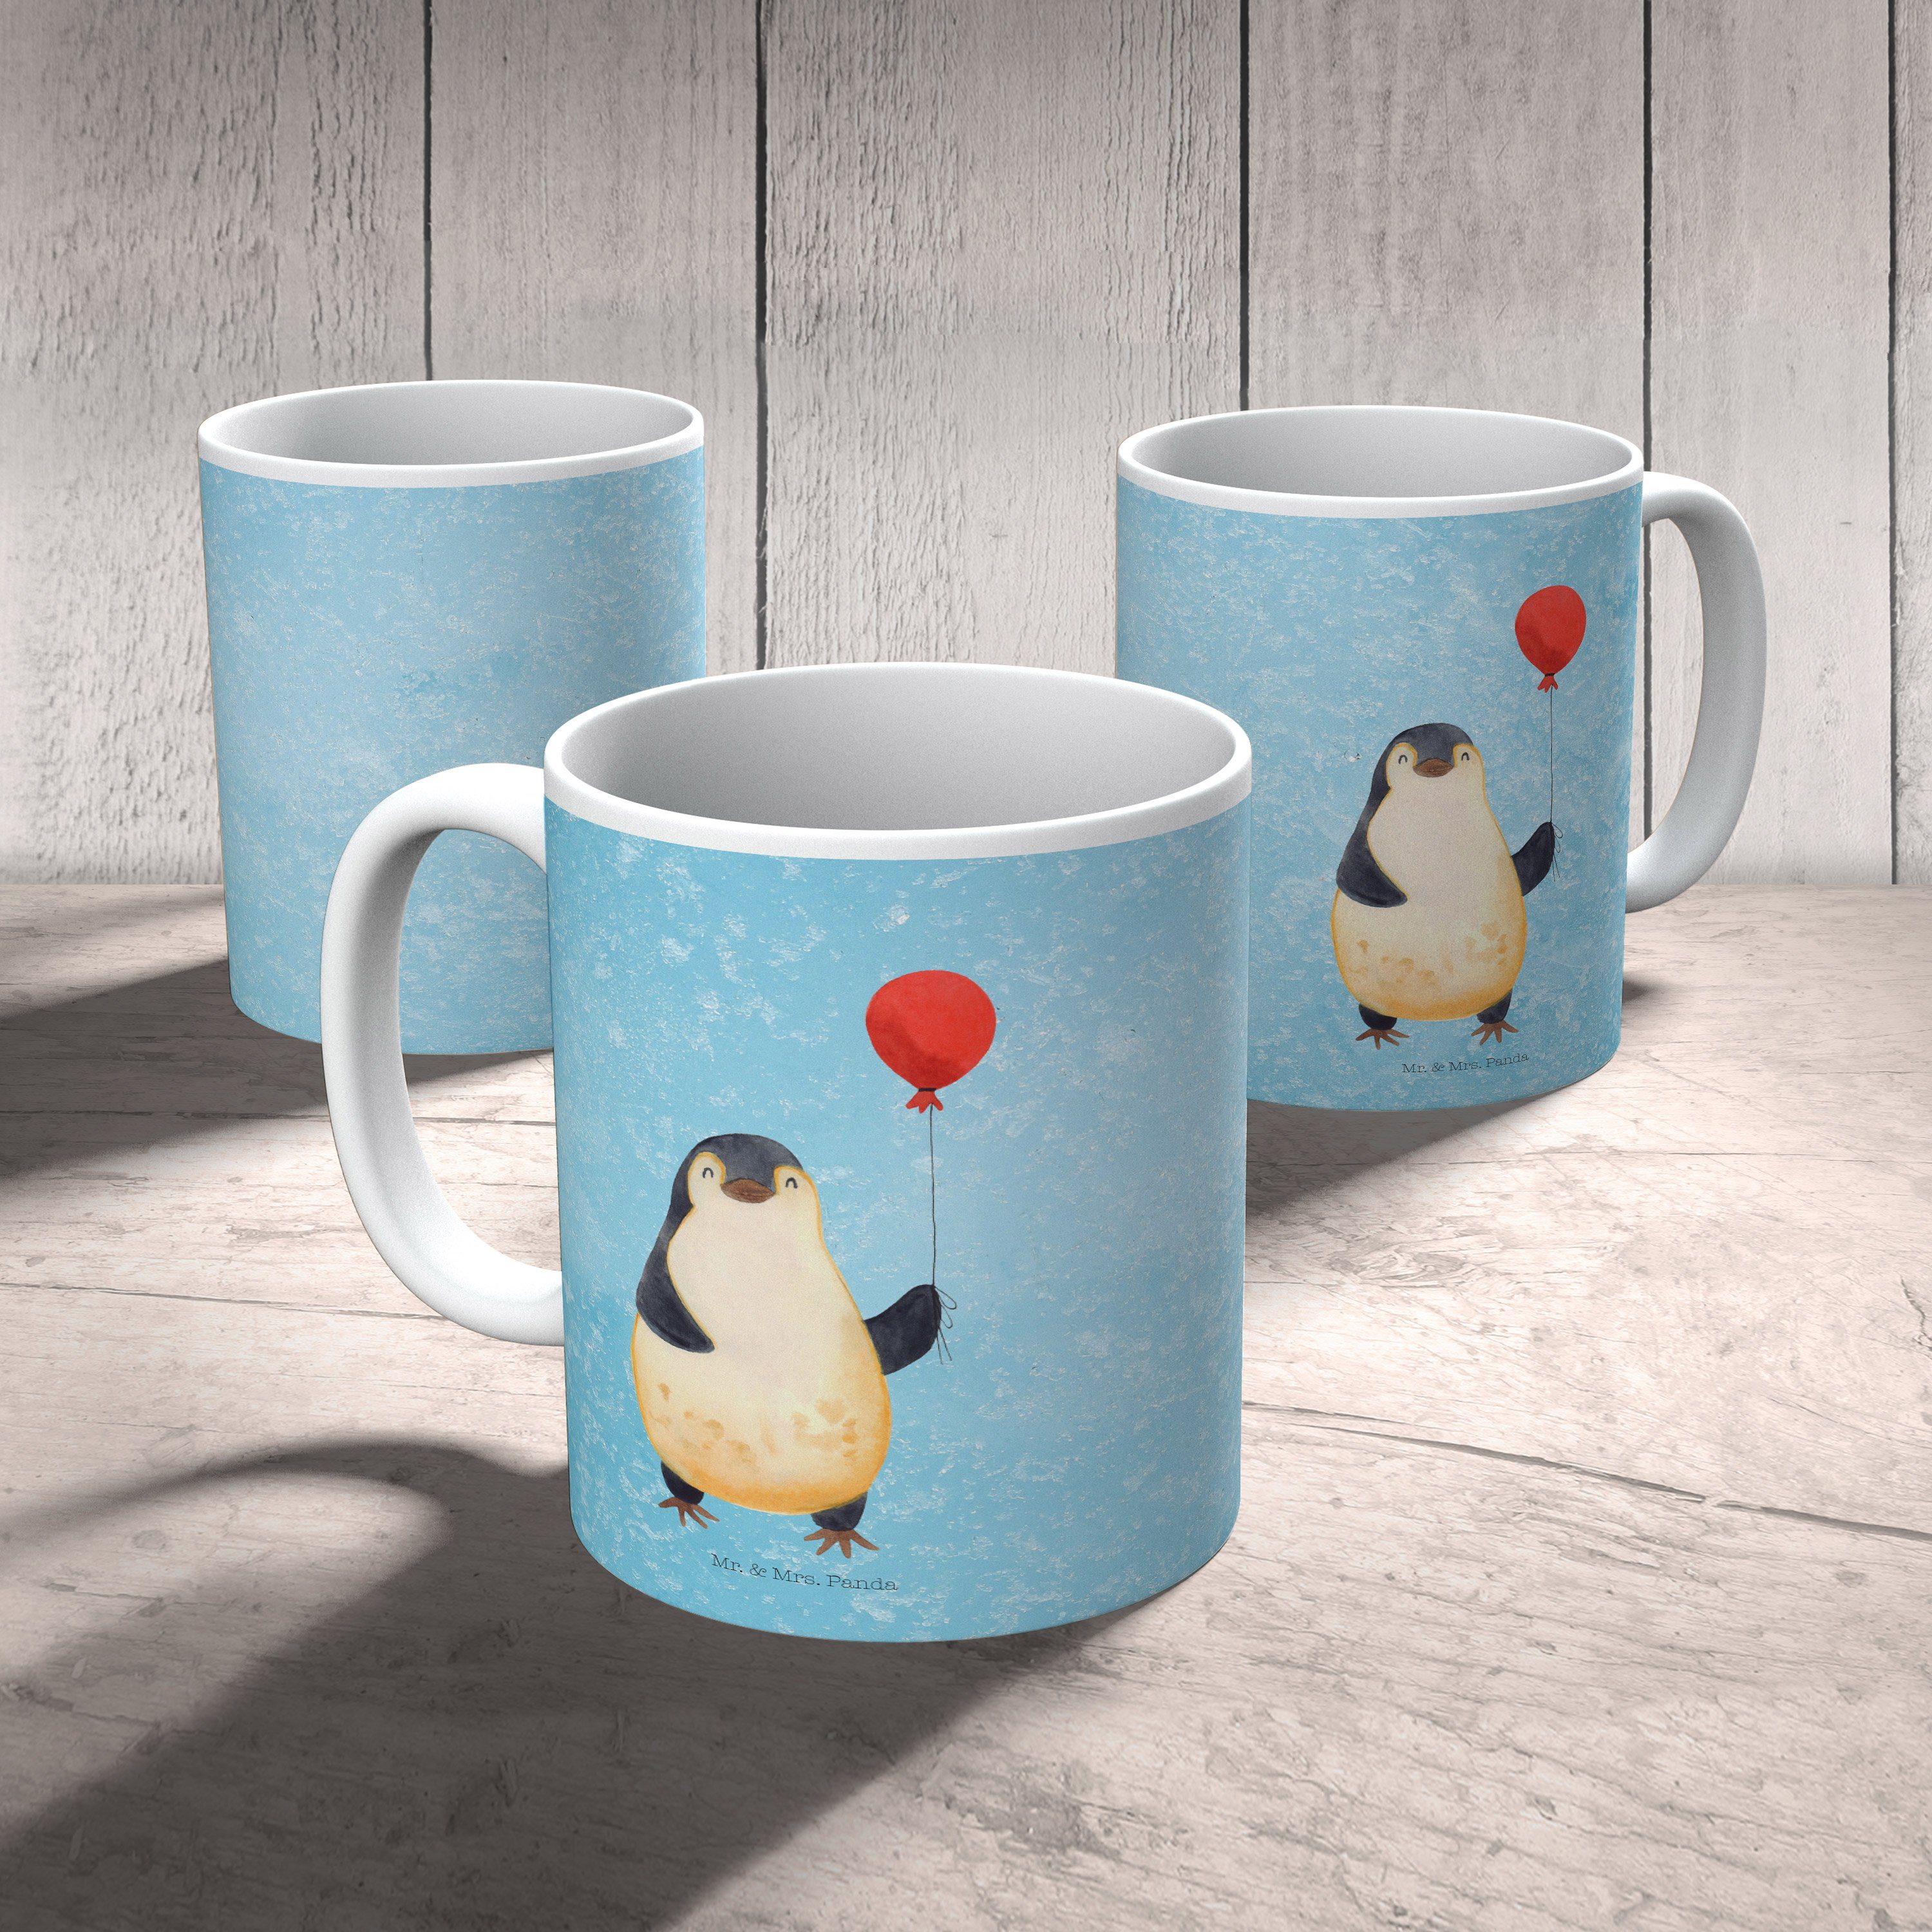 Mr. & Mrs. Panda Eisblau Pinguin - Tasse, Keramik Luftballon Büro Geschenk, Tasse Geschenk - Tasse